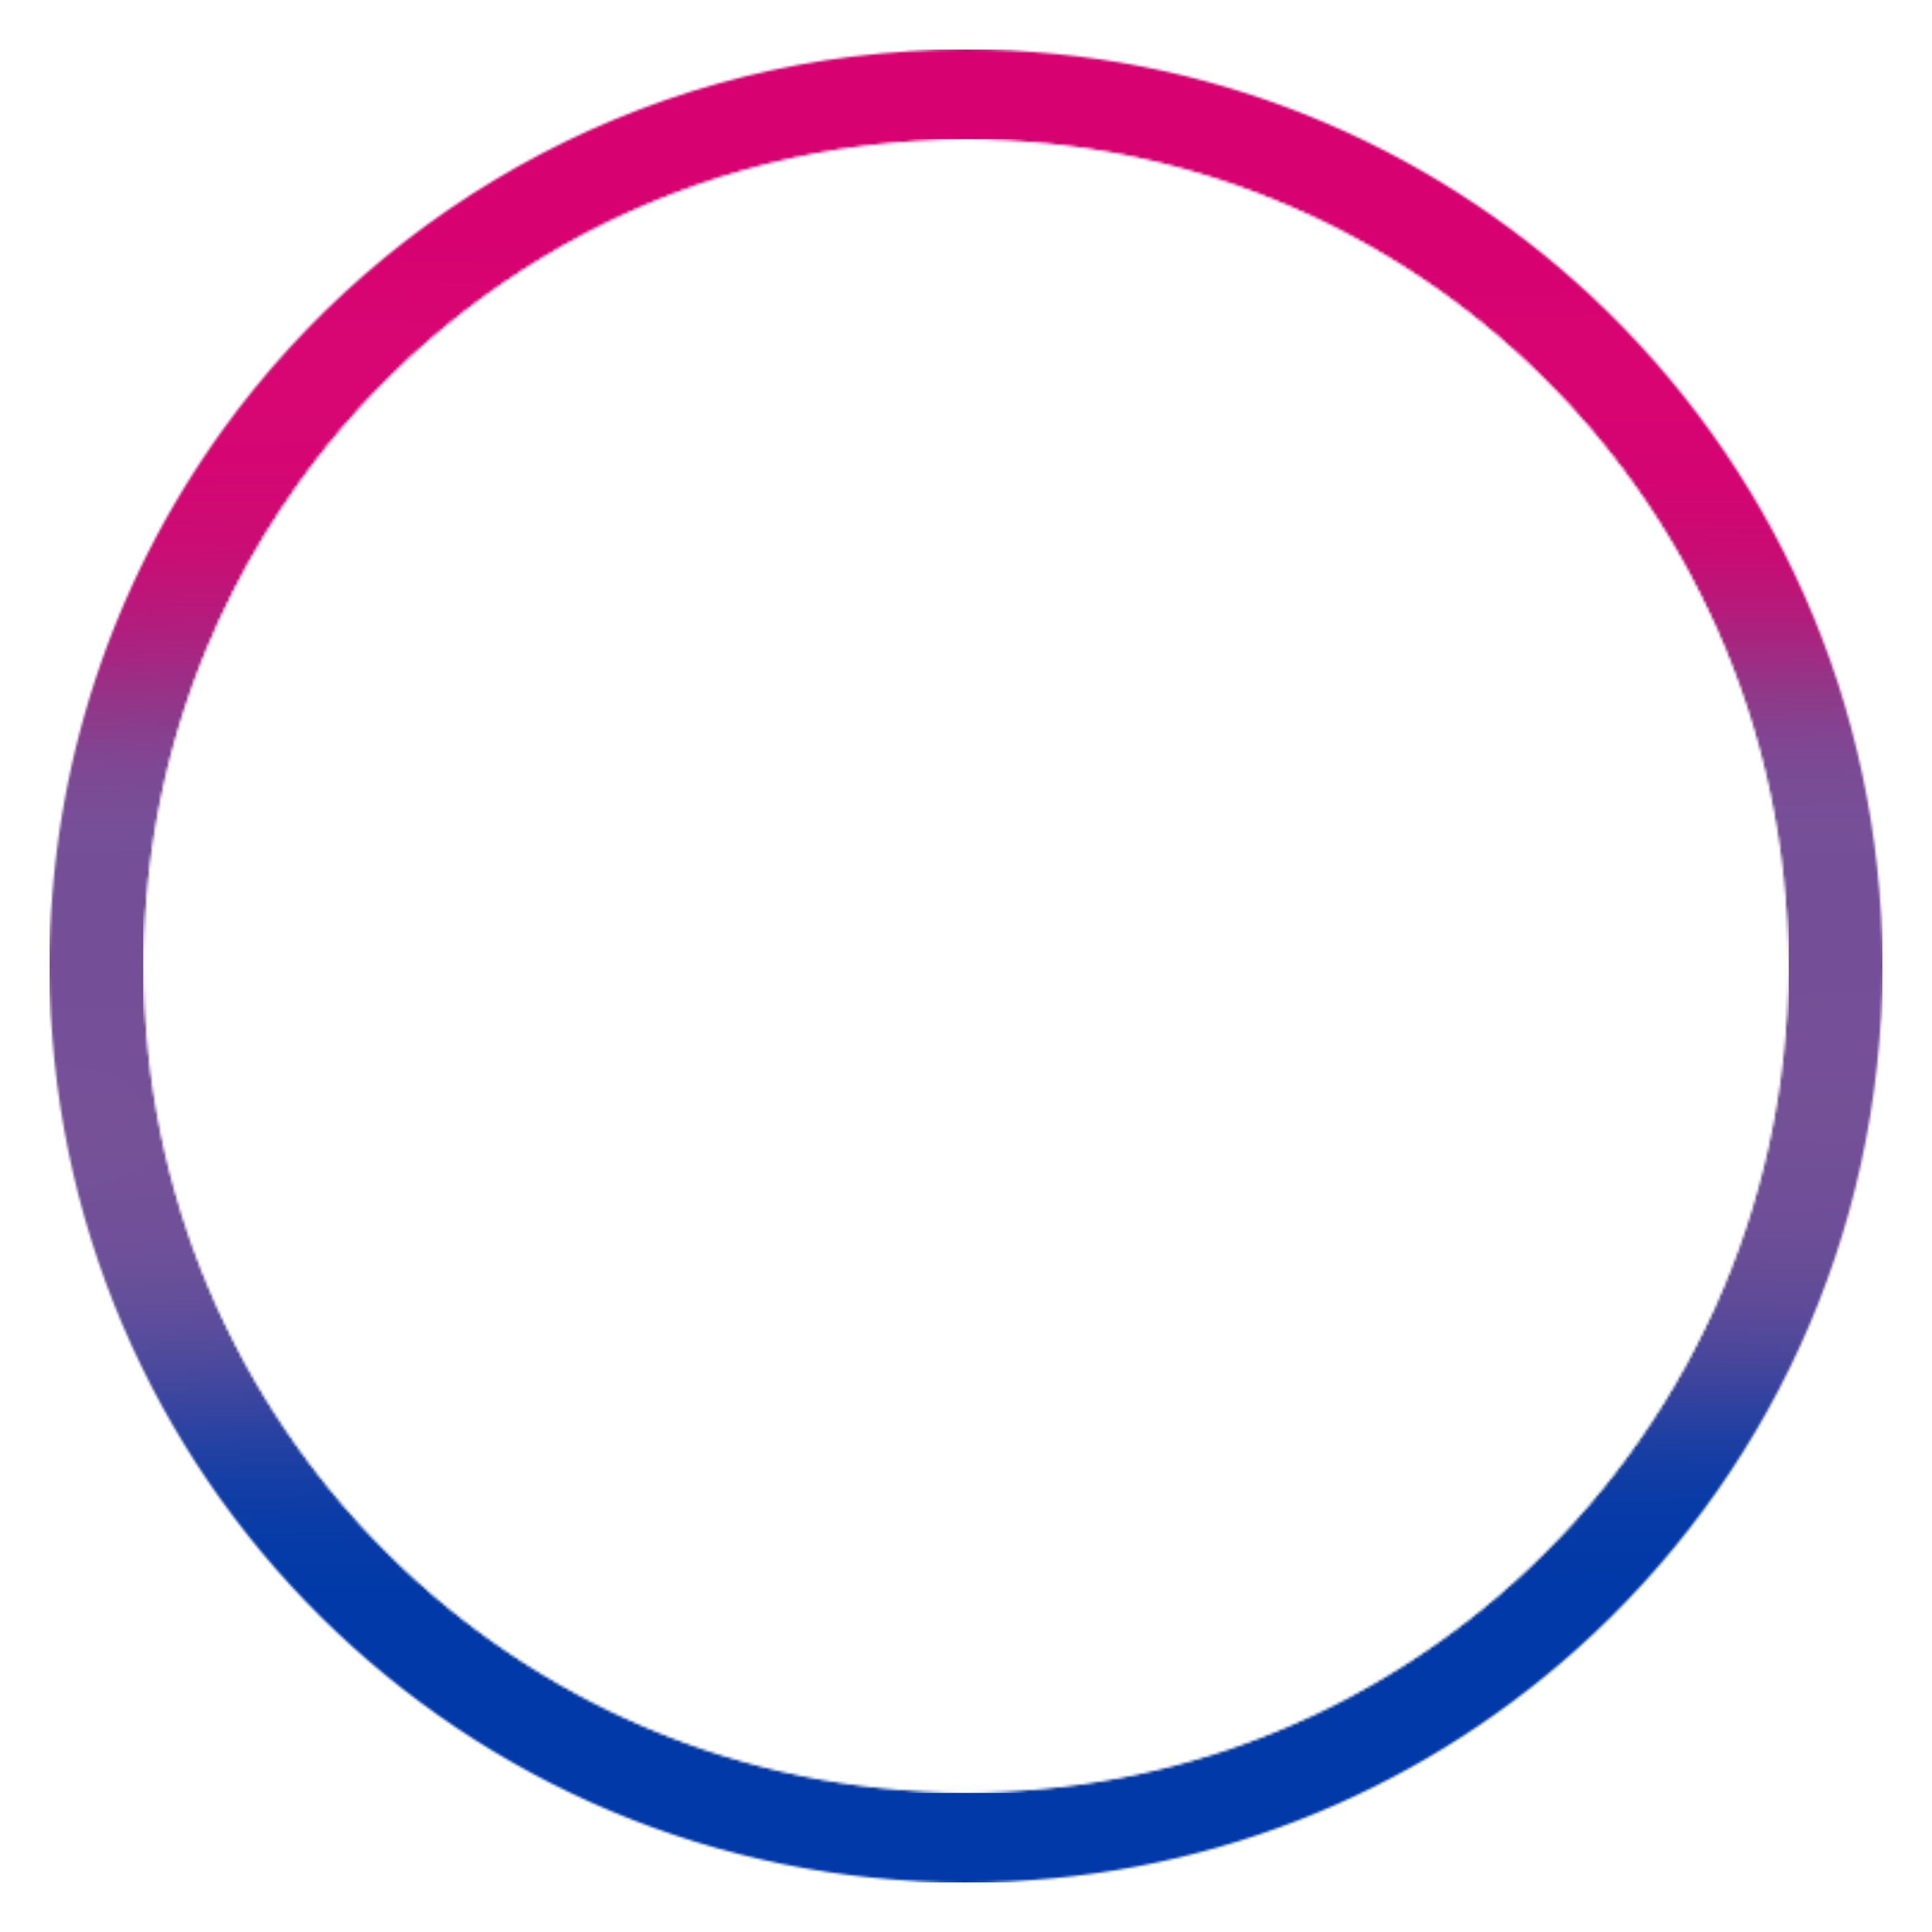 Round lines. Красивый круг. Круг для логотипа. Круг на прозрачном фоне. Окружность на белом фоне.